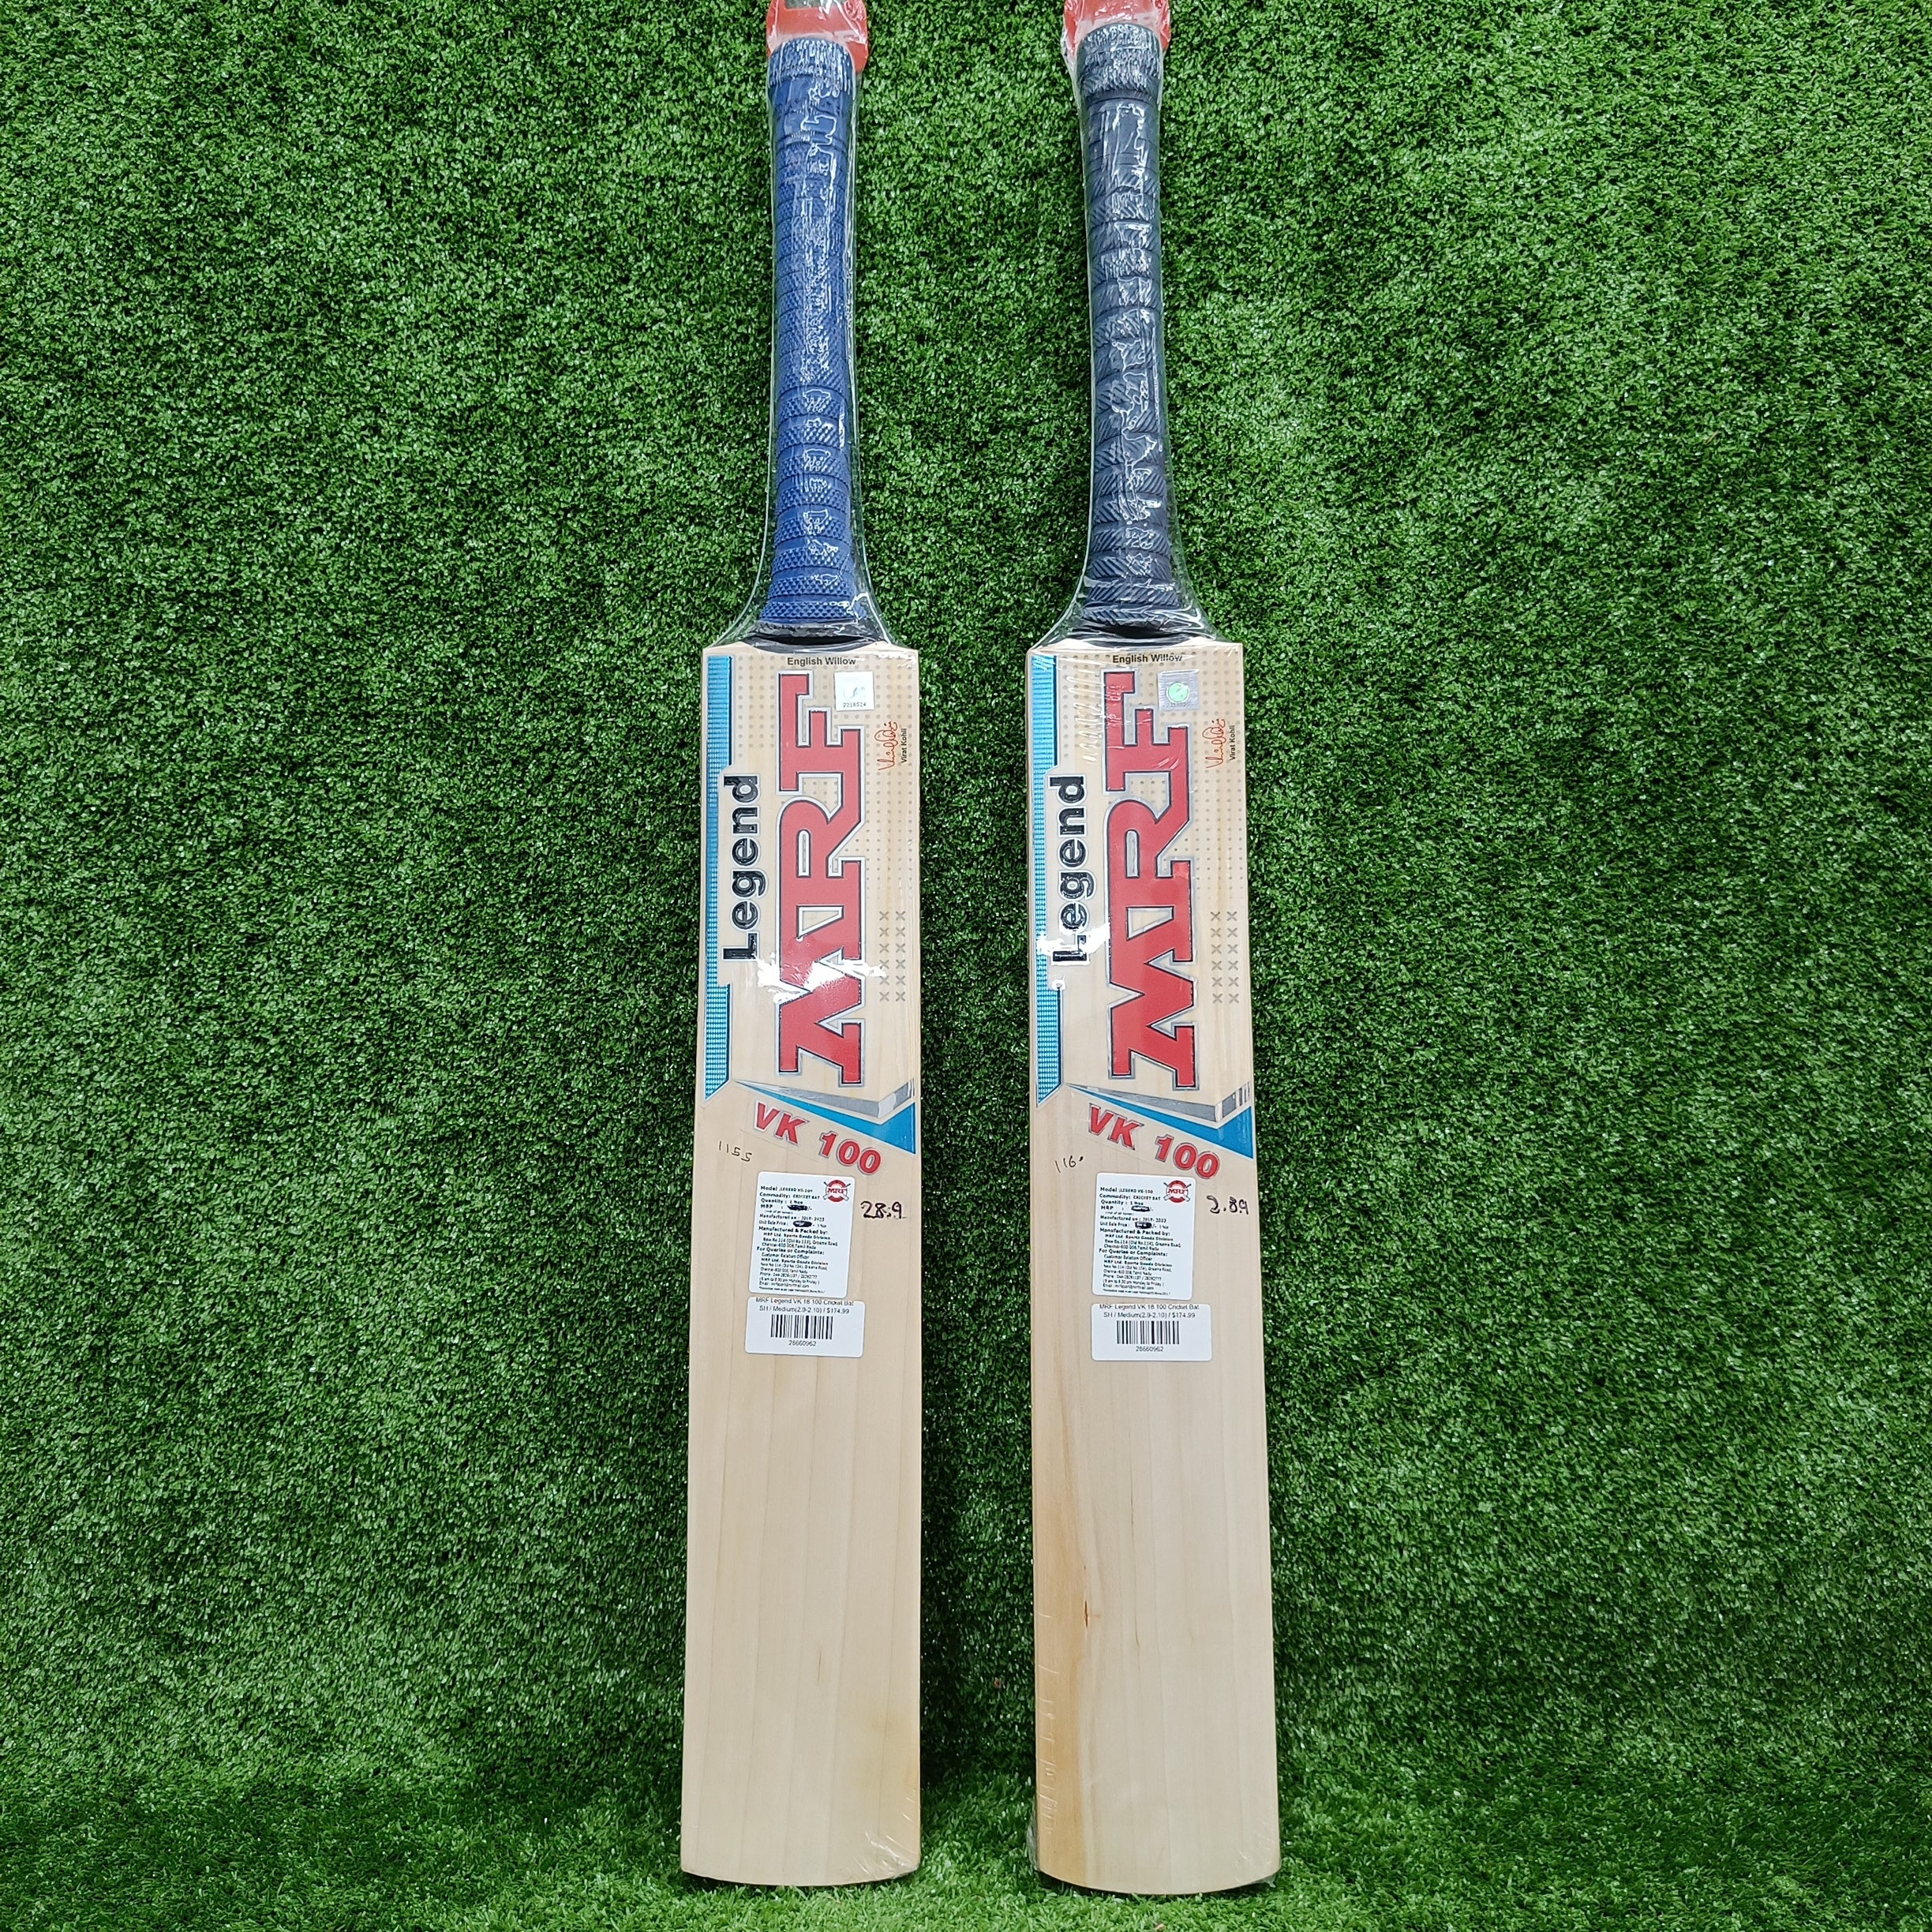 MRF Legend VK 18 100 Cricket Bat